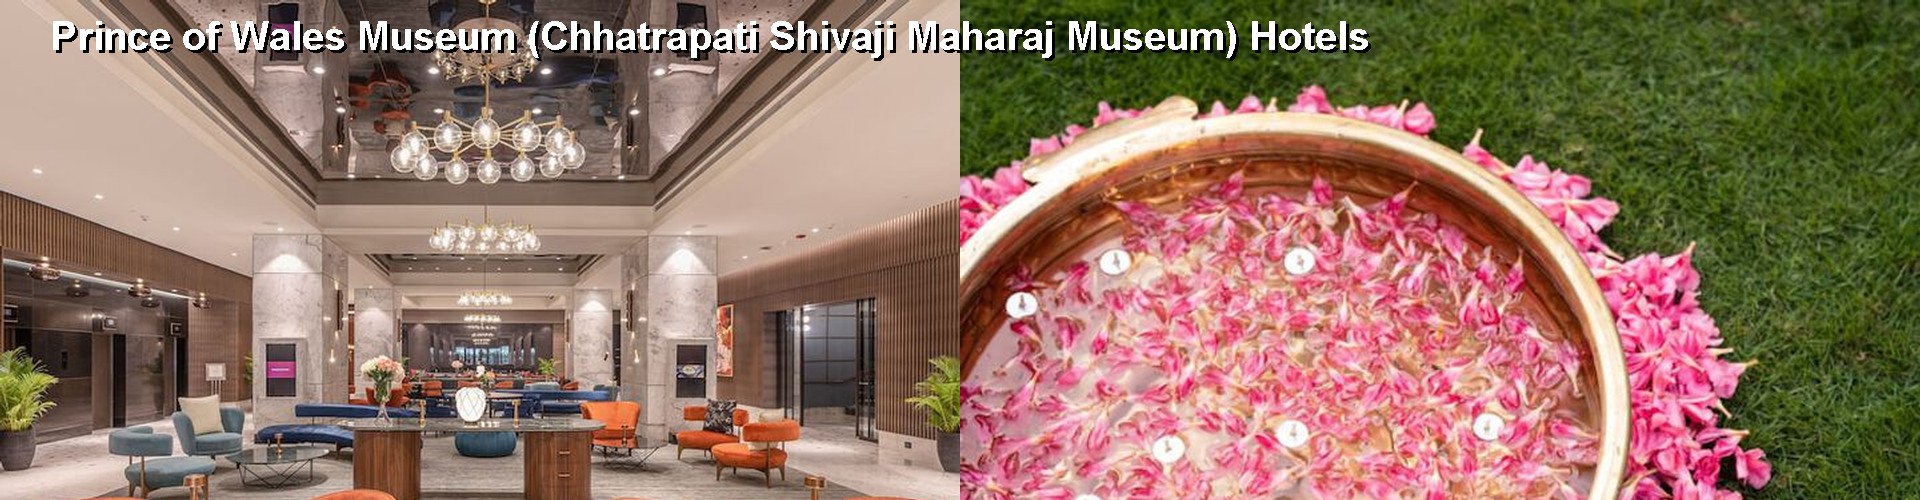 5 Best Hotels near Prince of Wales Museum (Chhatrapati Shivaji Maharaj Museum)